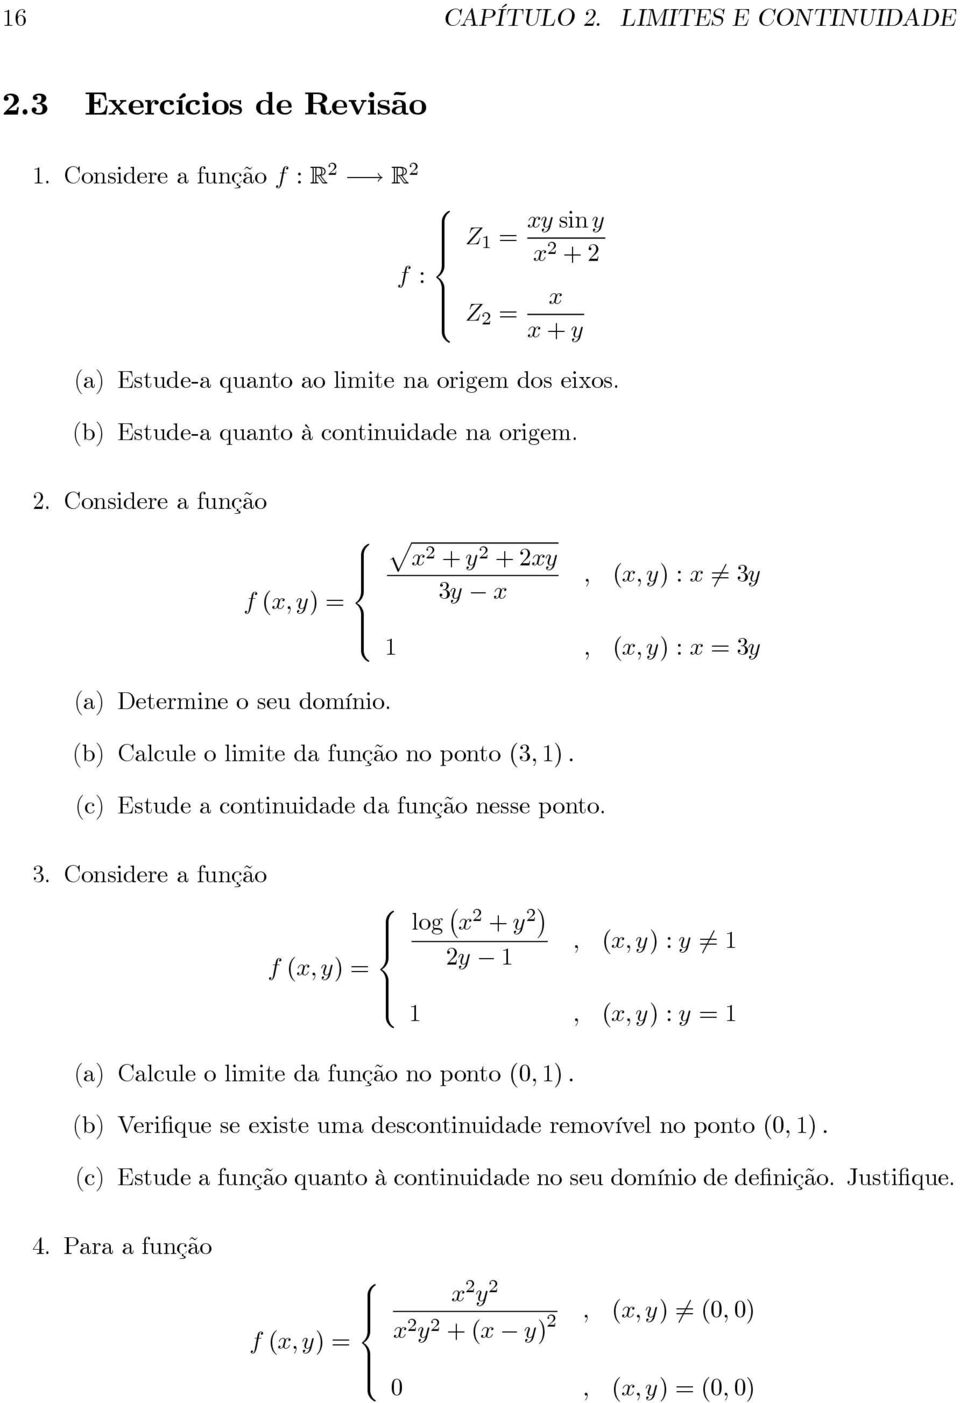 (c) Estude a cntinuidade da funçã nesse pnt. 3. Cnsidere a funçã lg 2 + 2, (, ) : 6= f (, ) = 2, (, ) : = (a) Calcule limite da funçã n pnt (0, ).